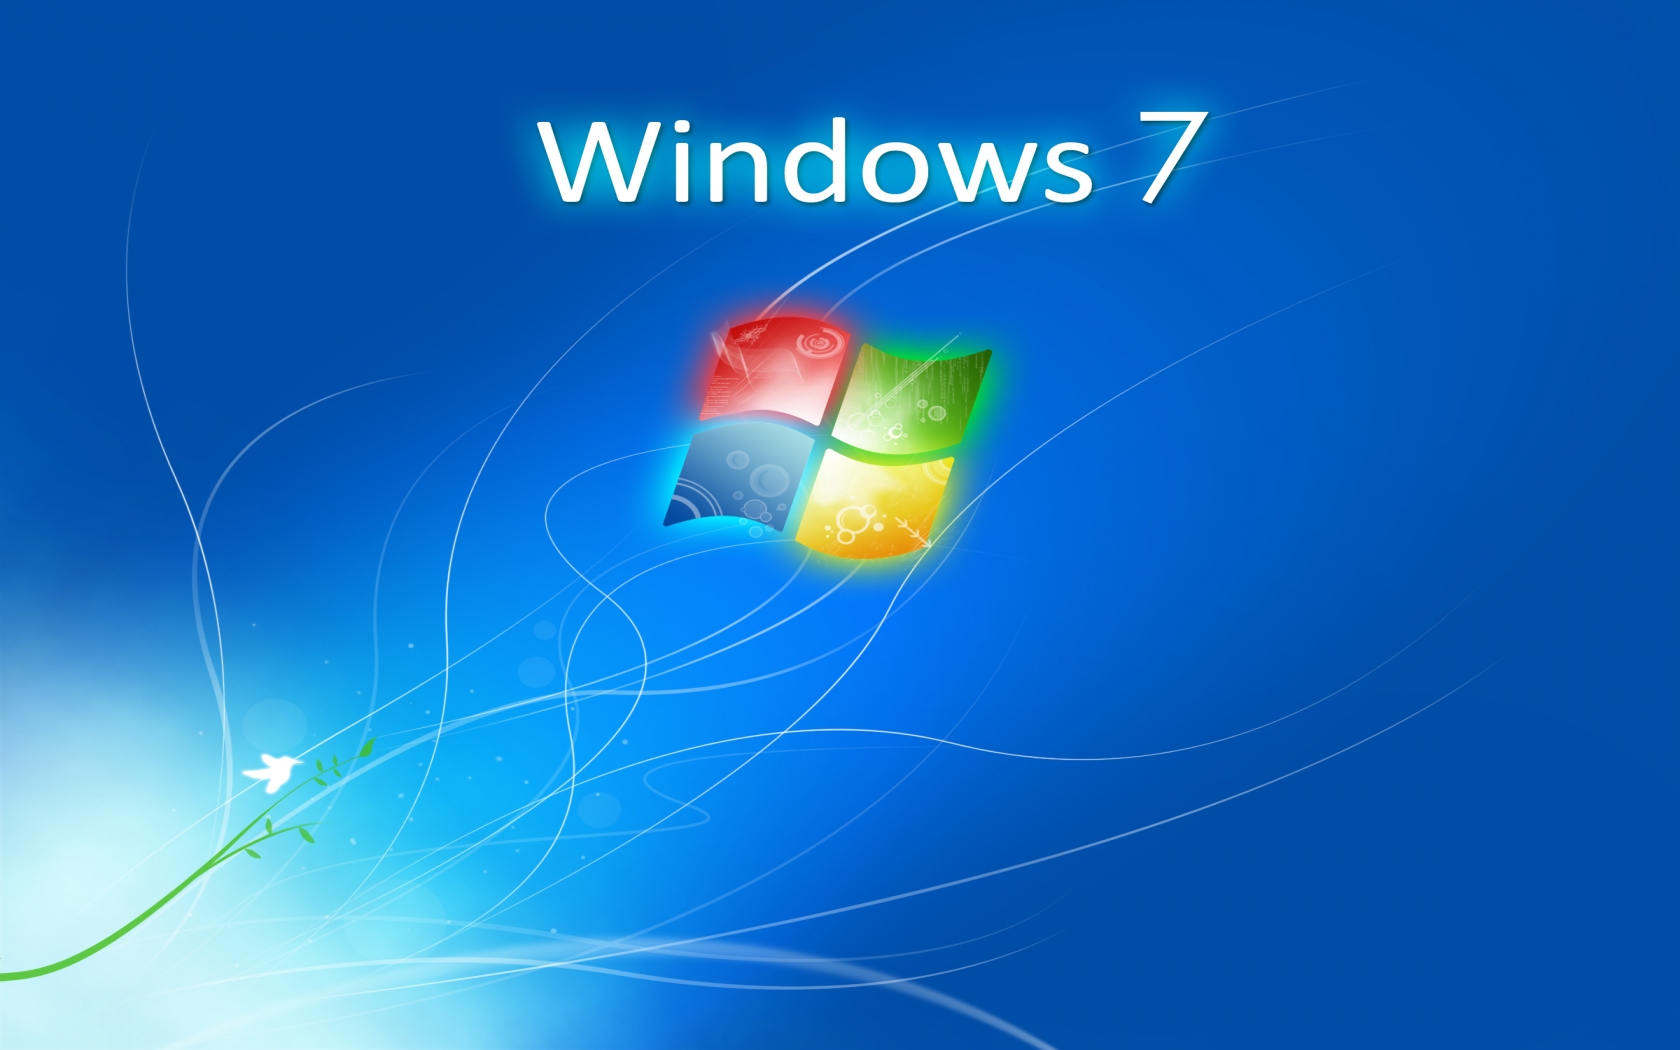 Vista windows 7 logo wallpaper background windows 7 logo windows 7